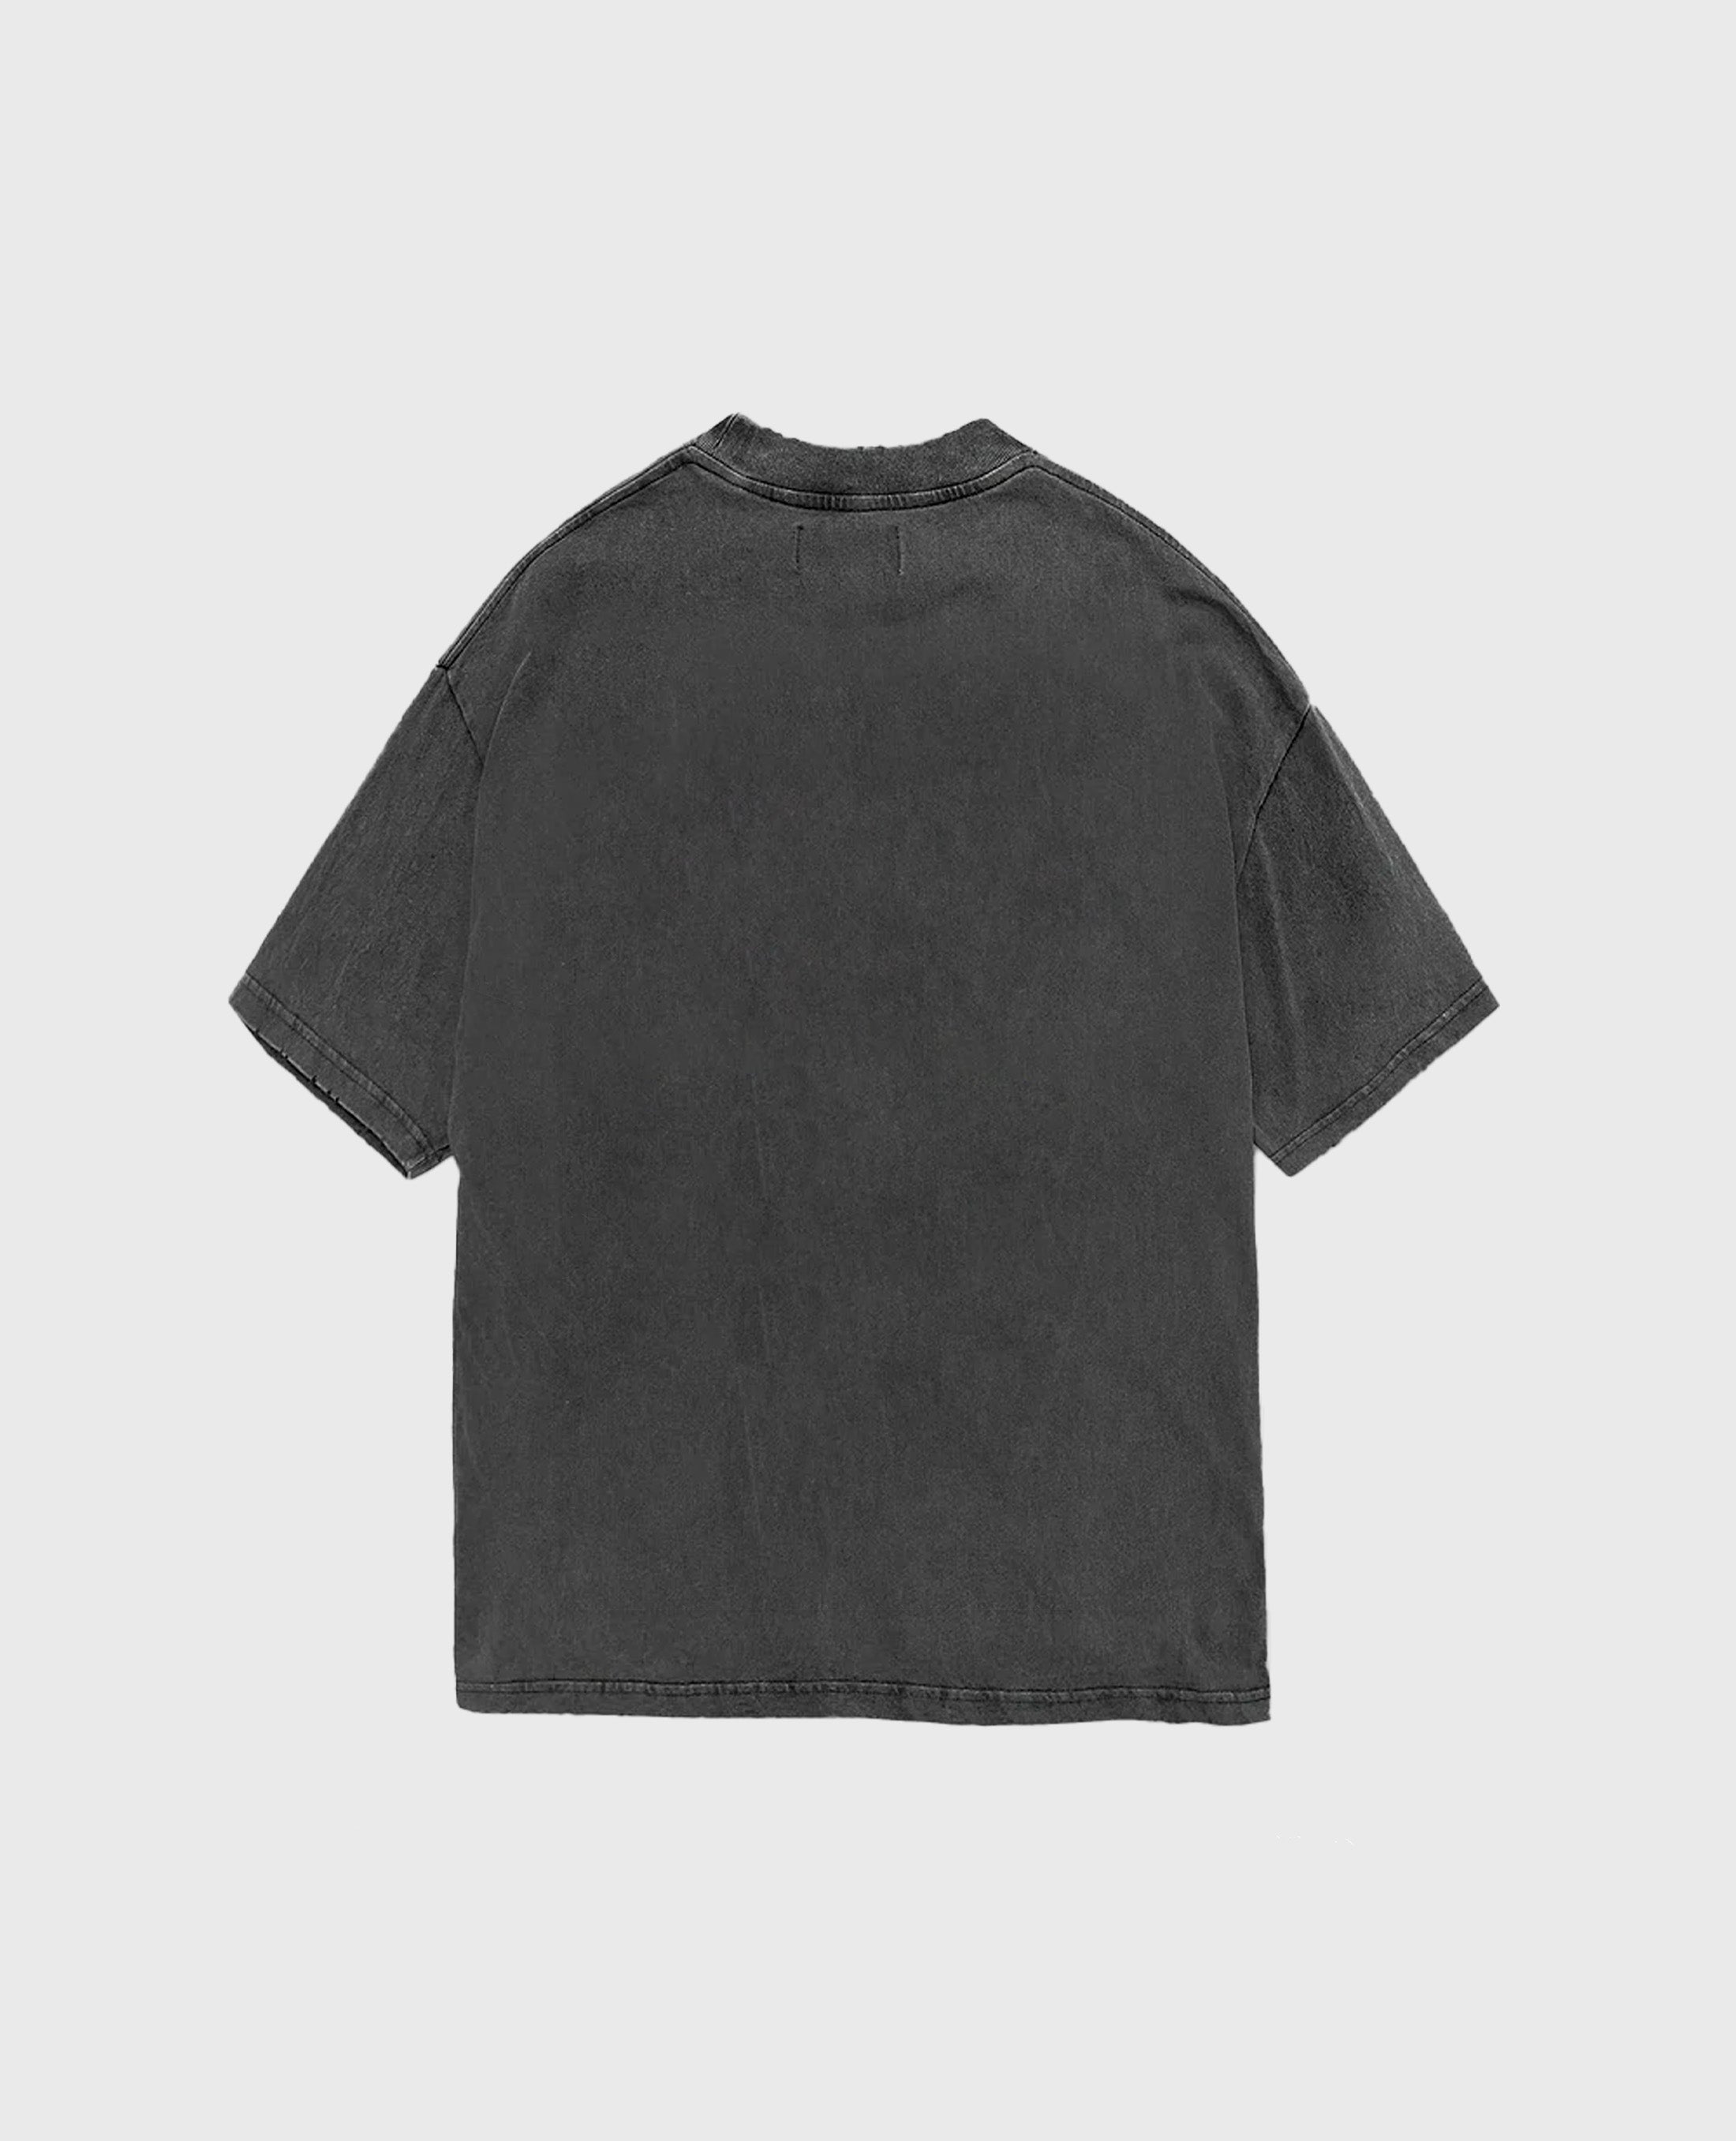 Dobermann T-Shirt - Hipok Brand